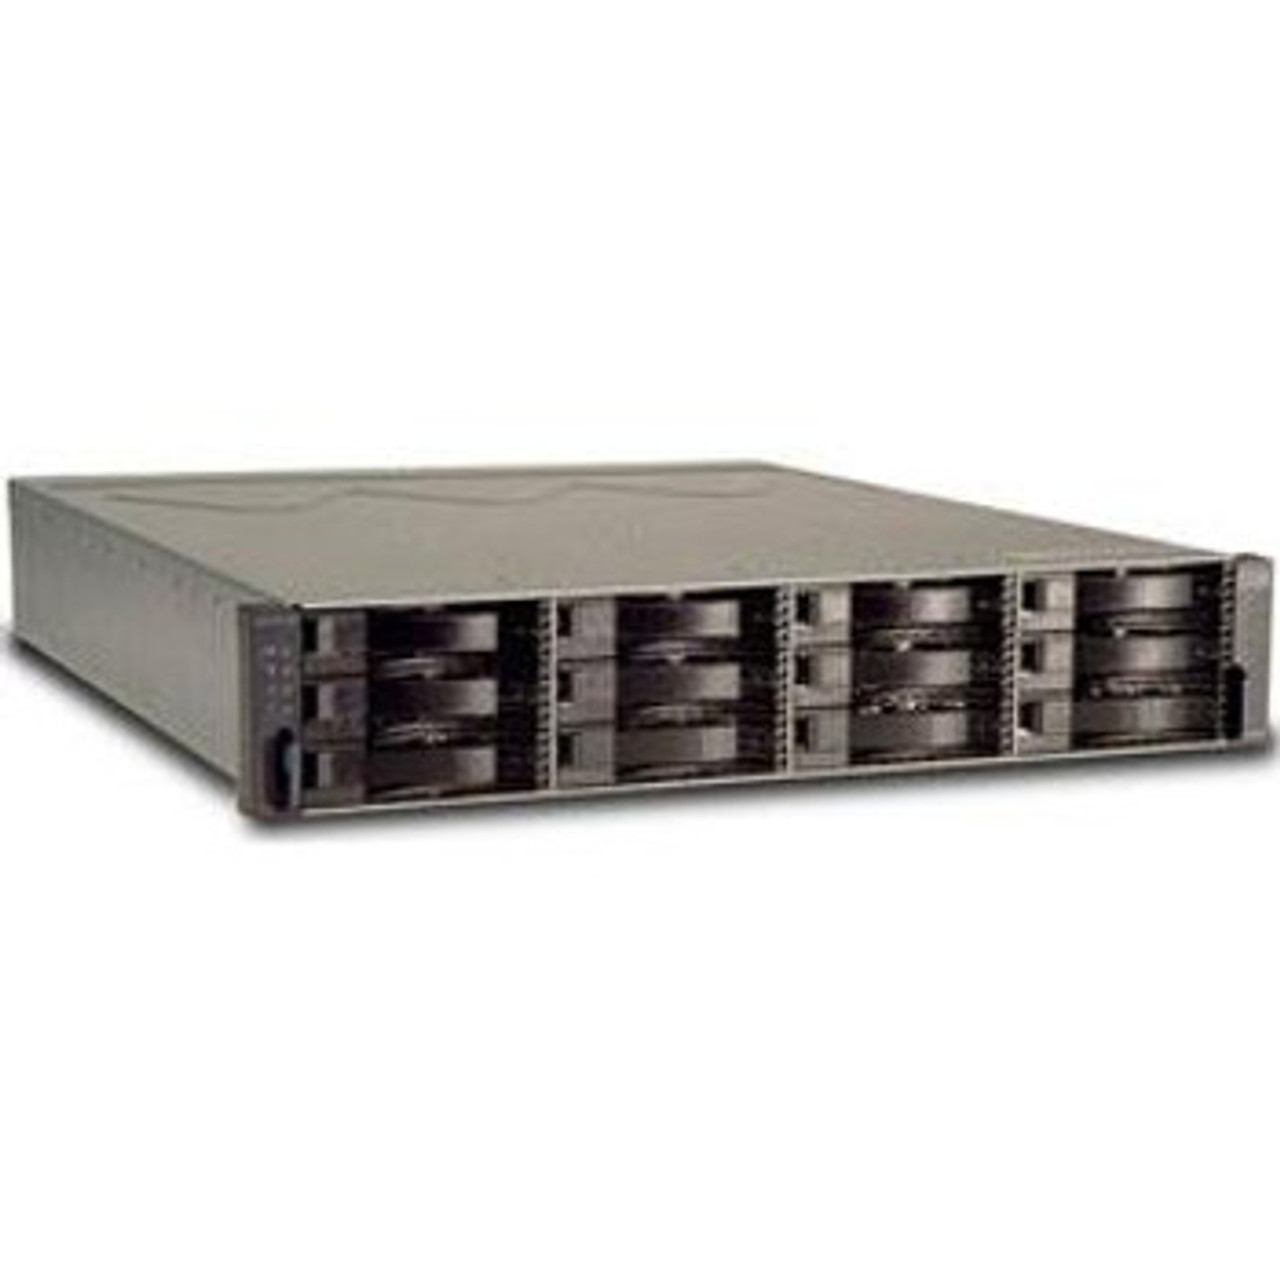 172642E | IBM | System Storage DS3400 Dual Controller Express Model